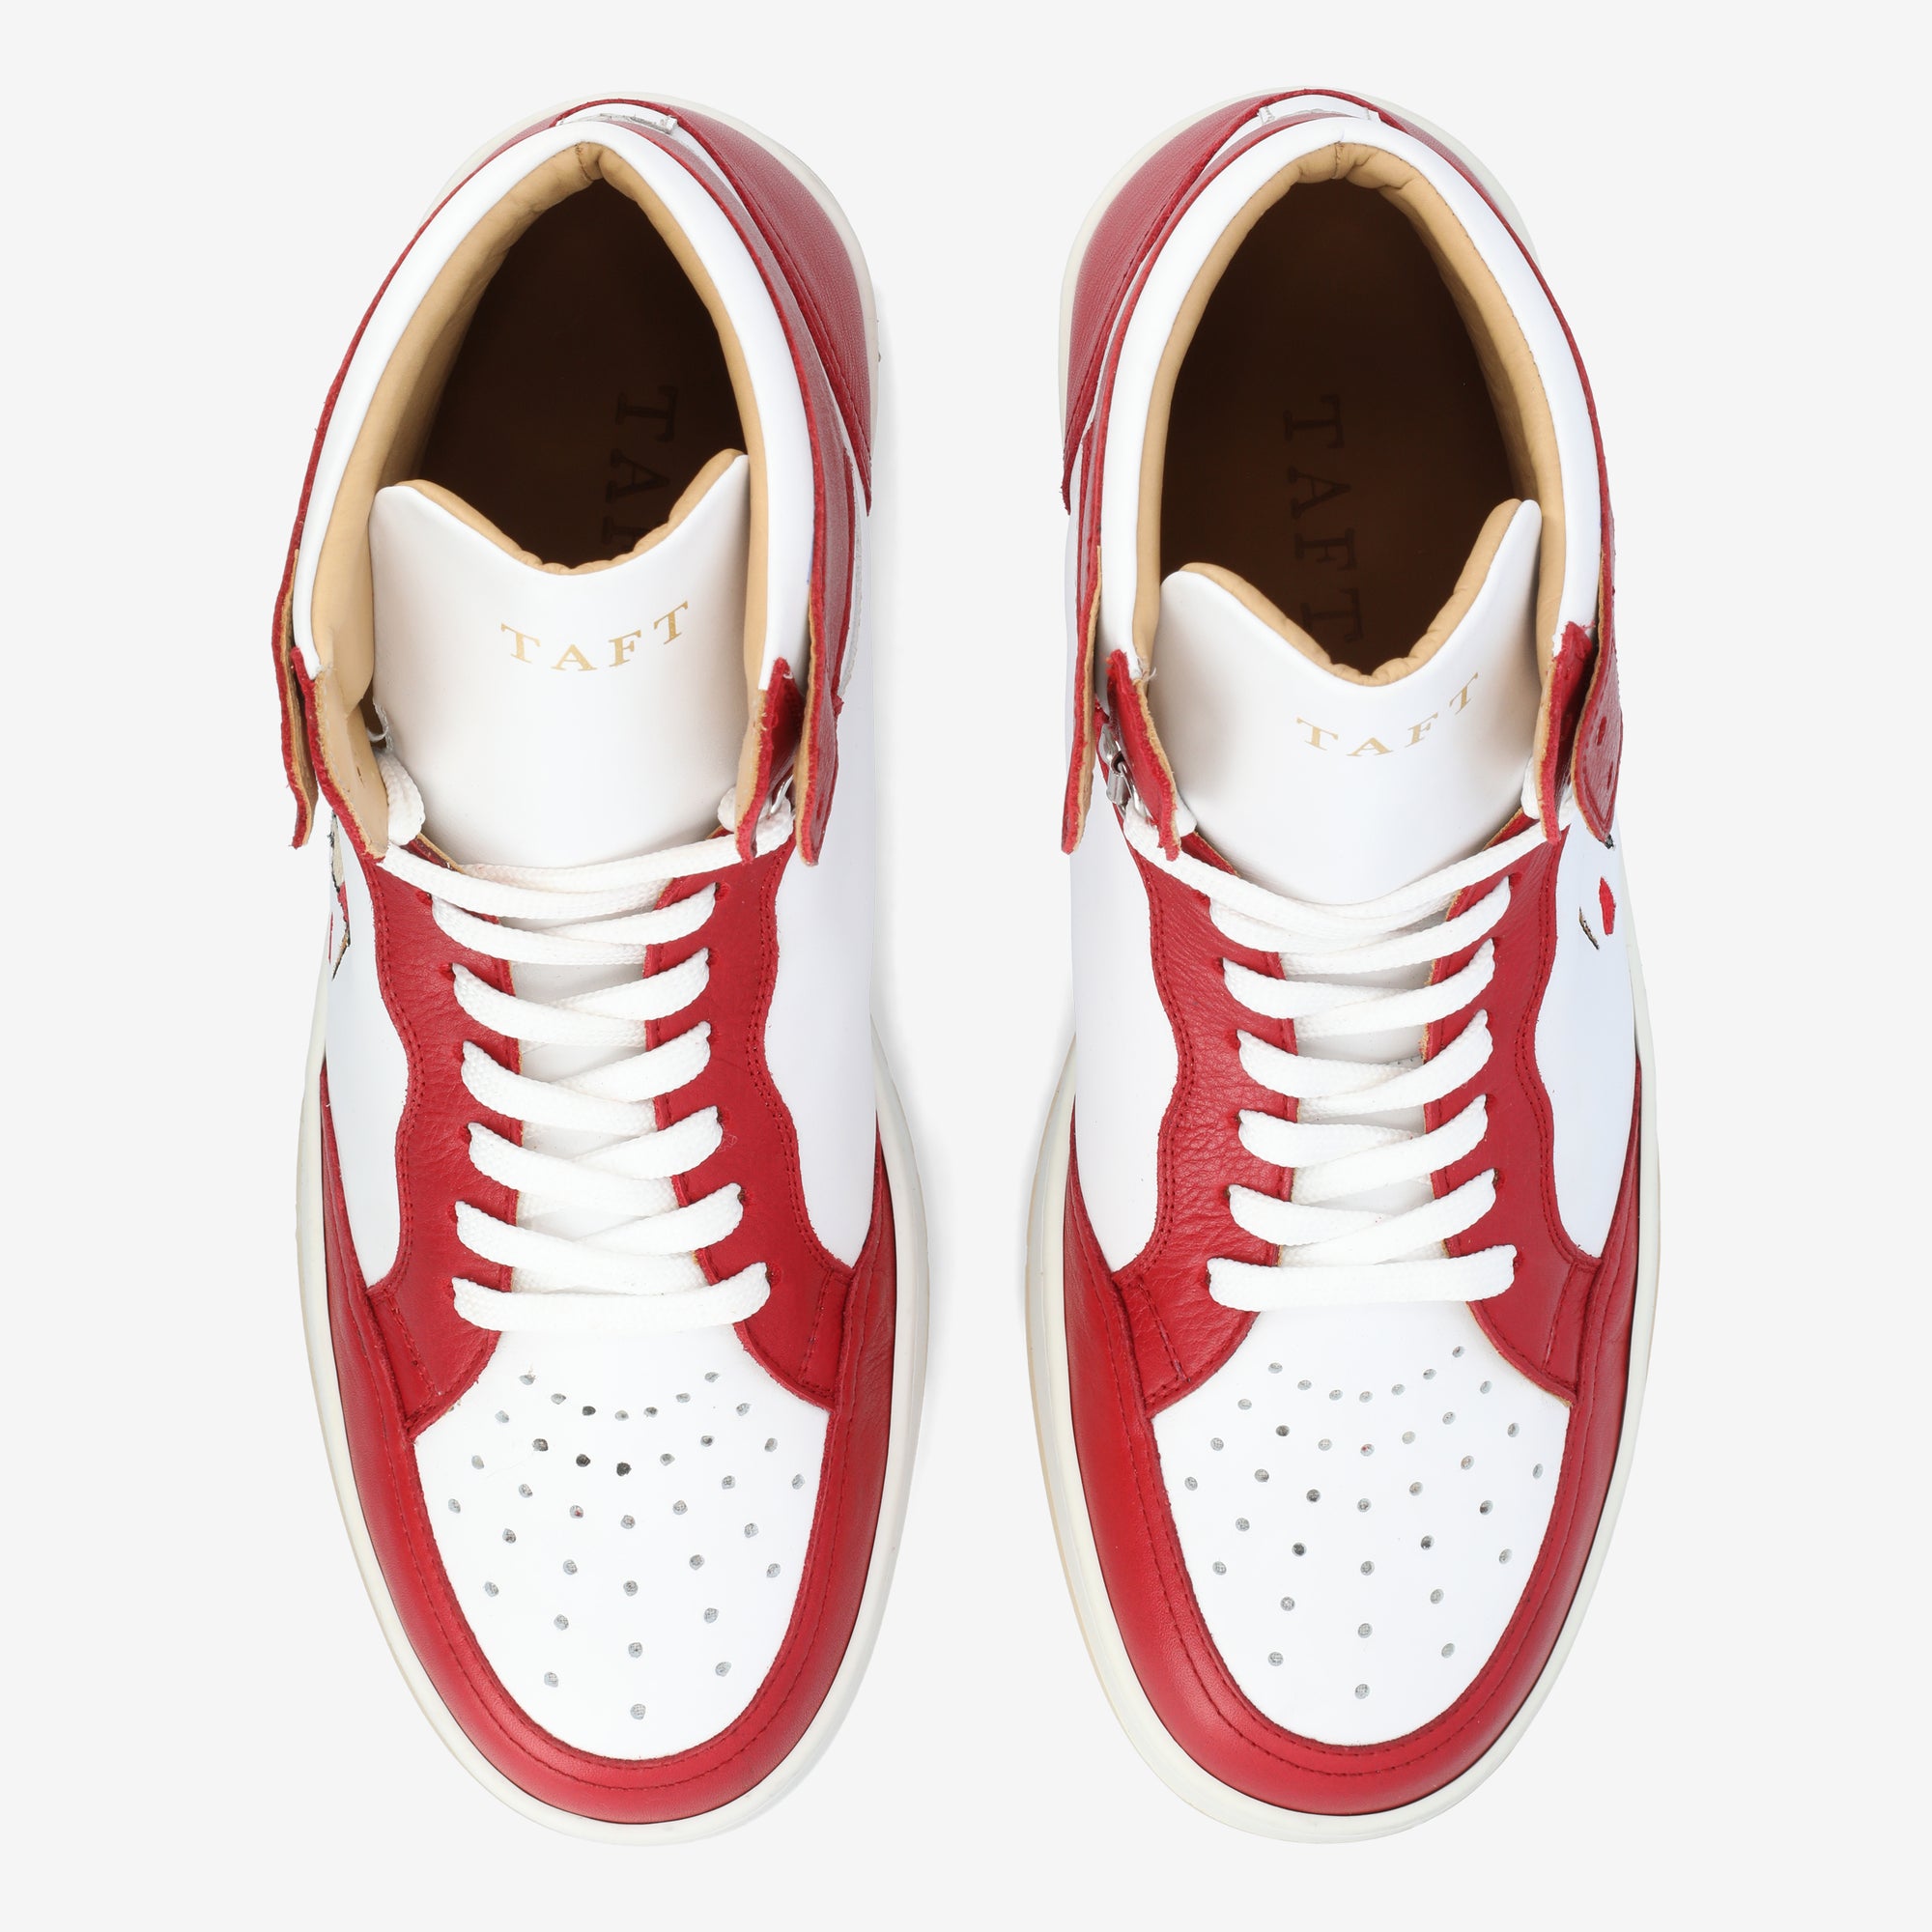 The Rapido High-top Sneaker in Red Hummingbird